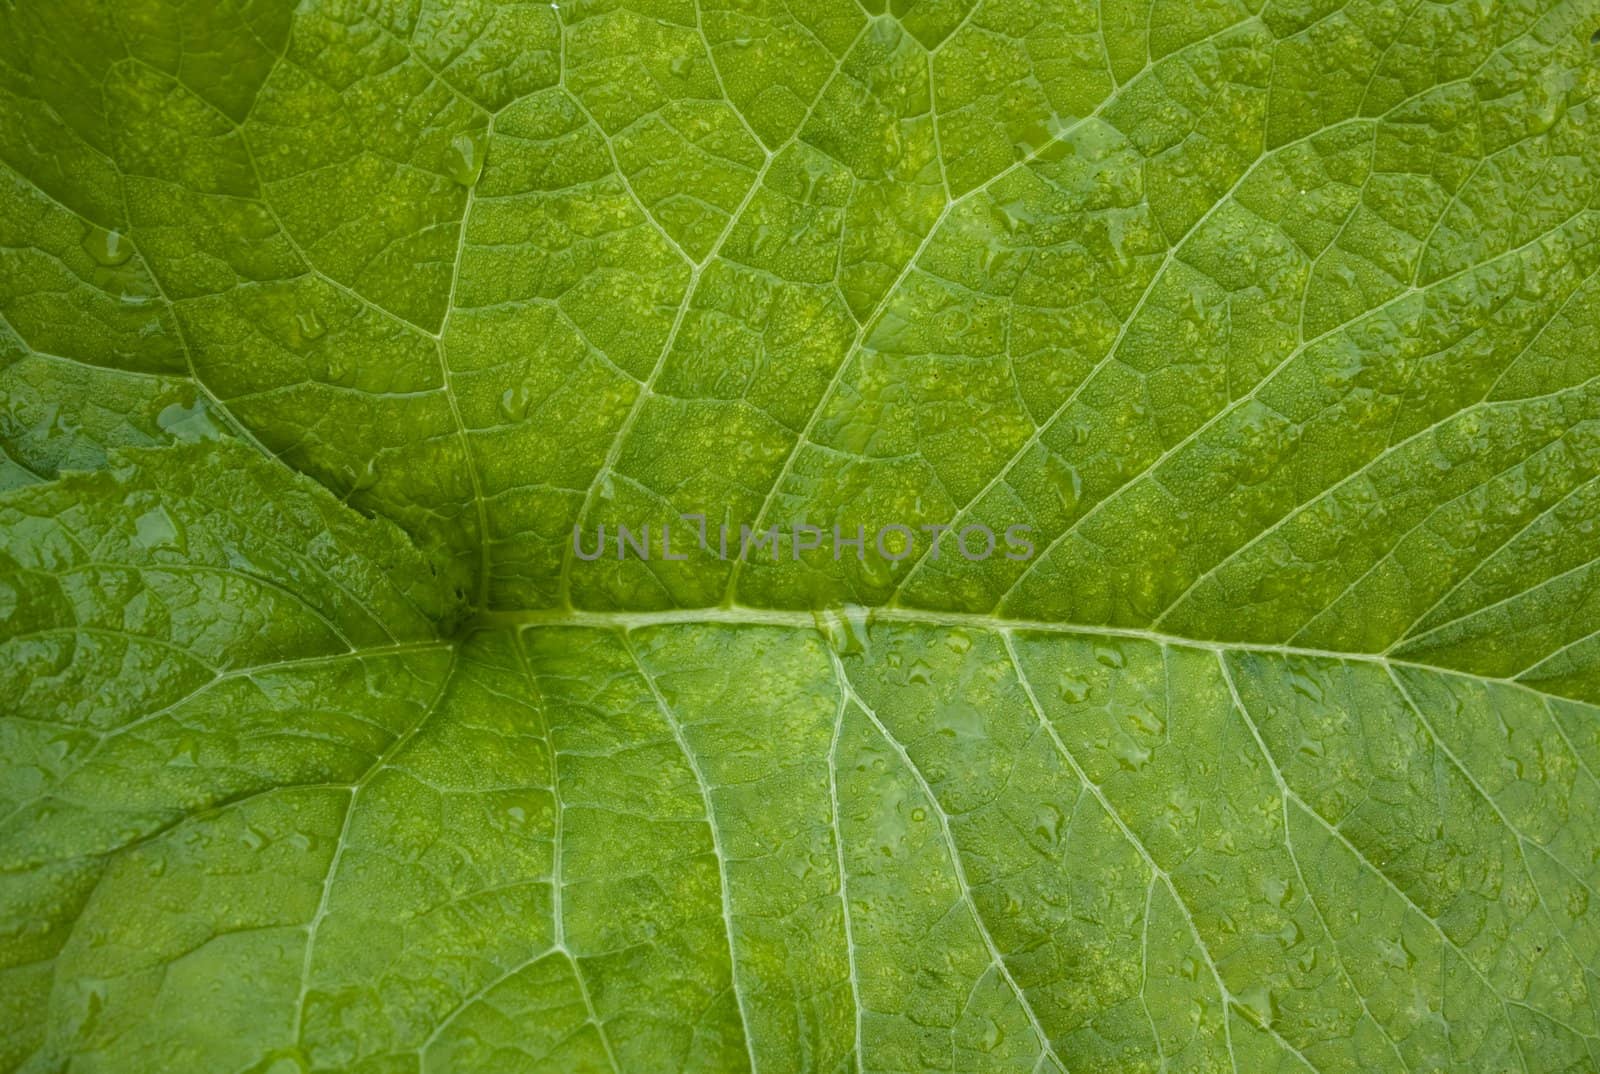 The green sheet inula by nikolpetr